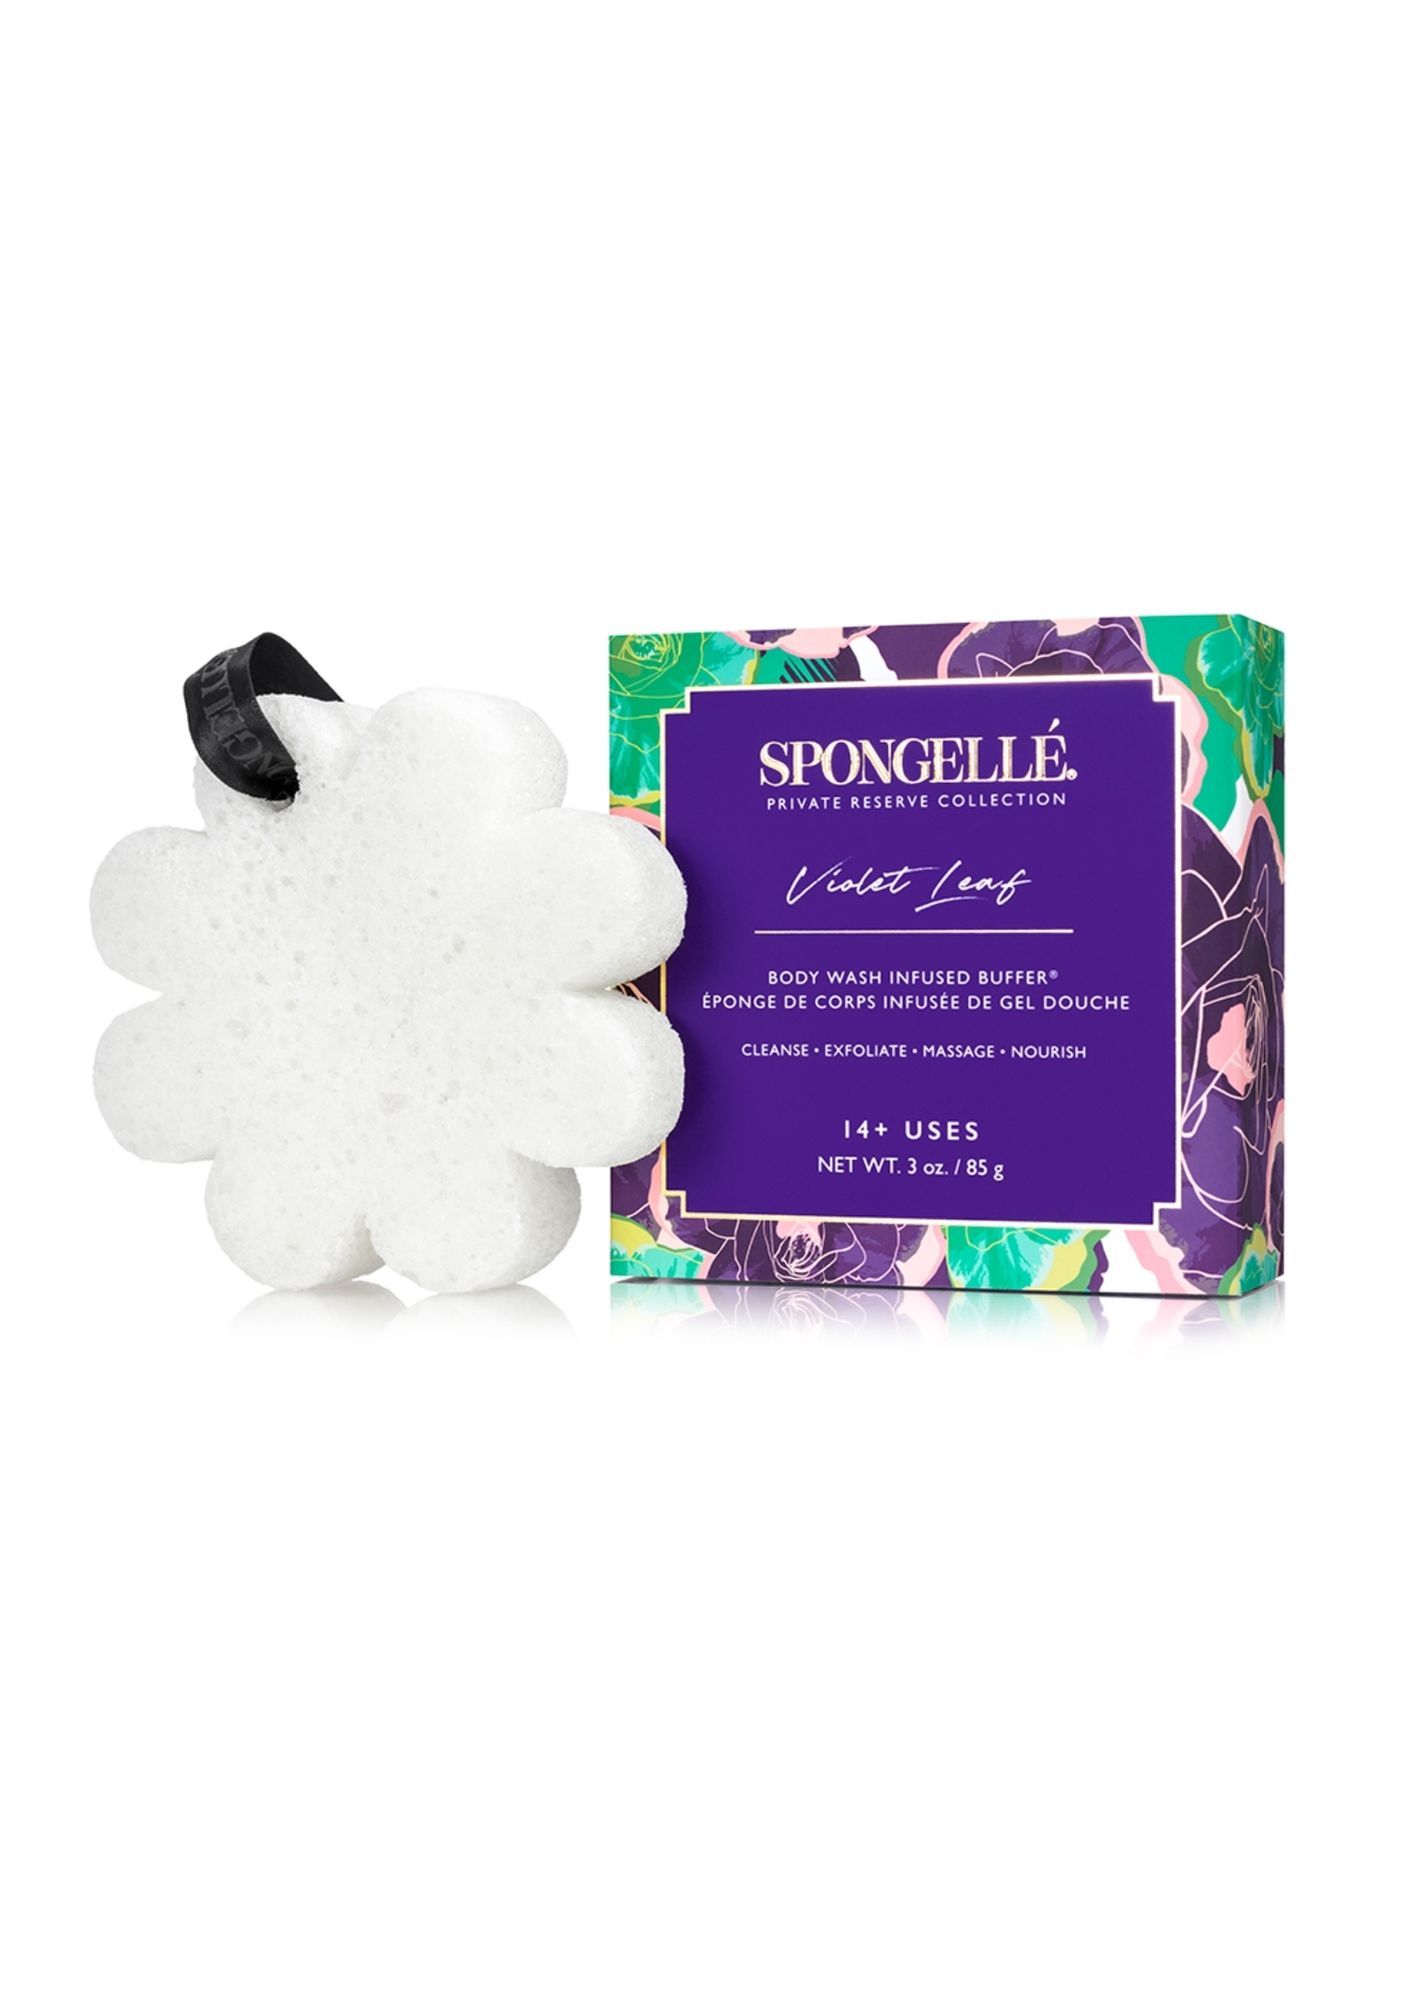 Spongellé Boxed Body Wash Infused Buffer Home & Lifestyle Spongelle Violet Leaf